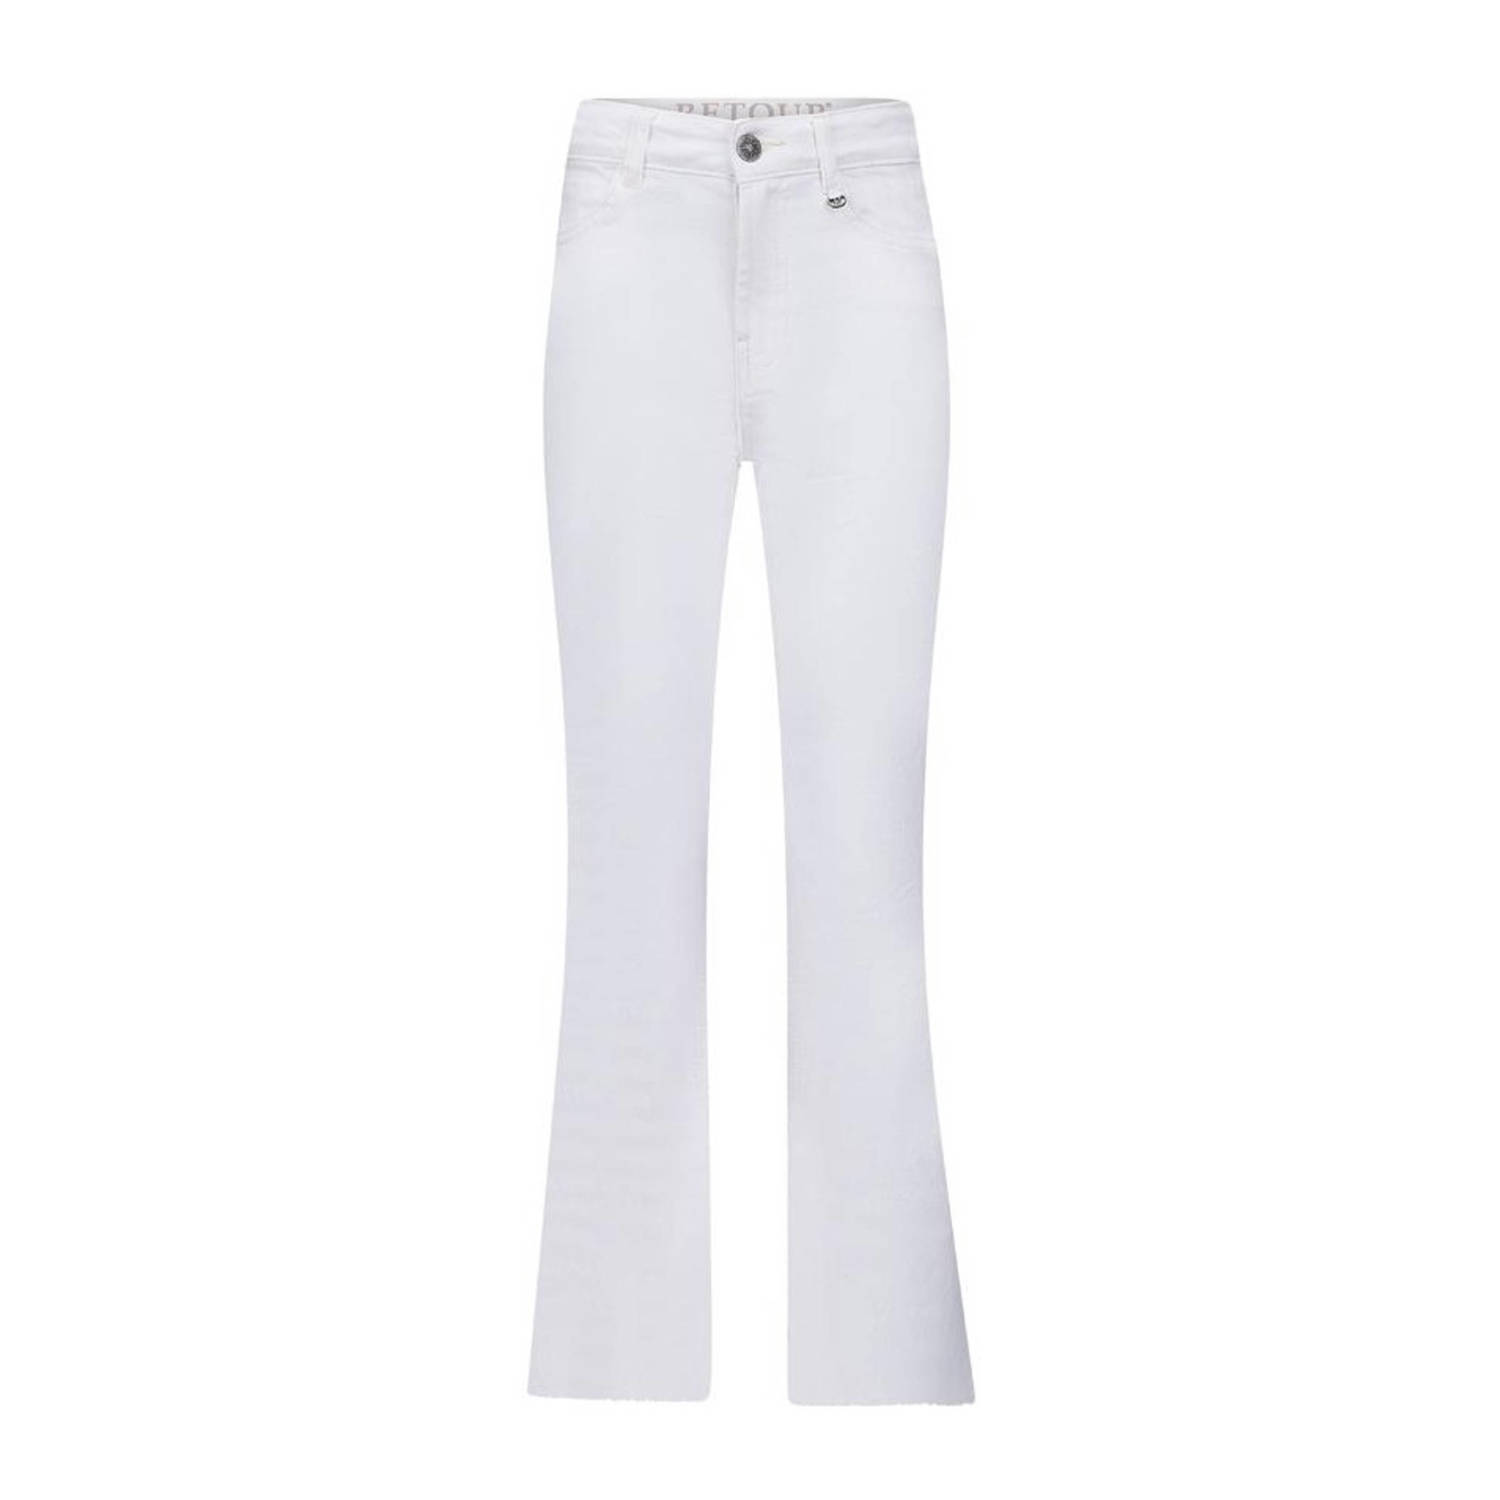 Retour Jeans flared jeans Valentina white denim